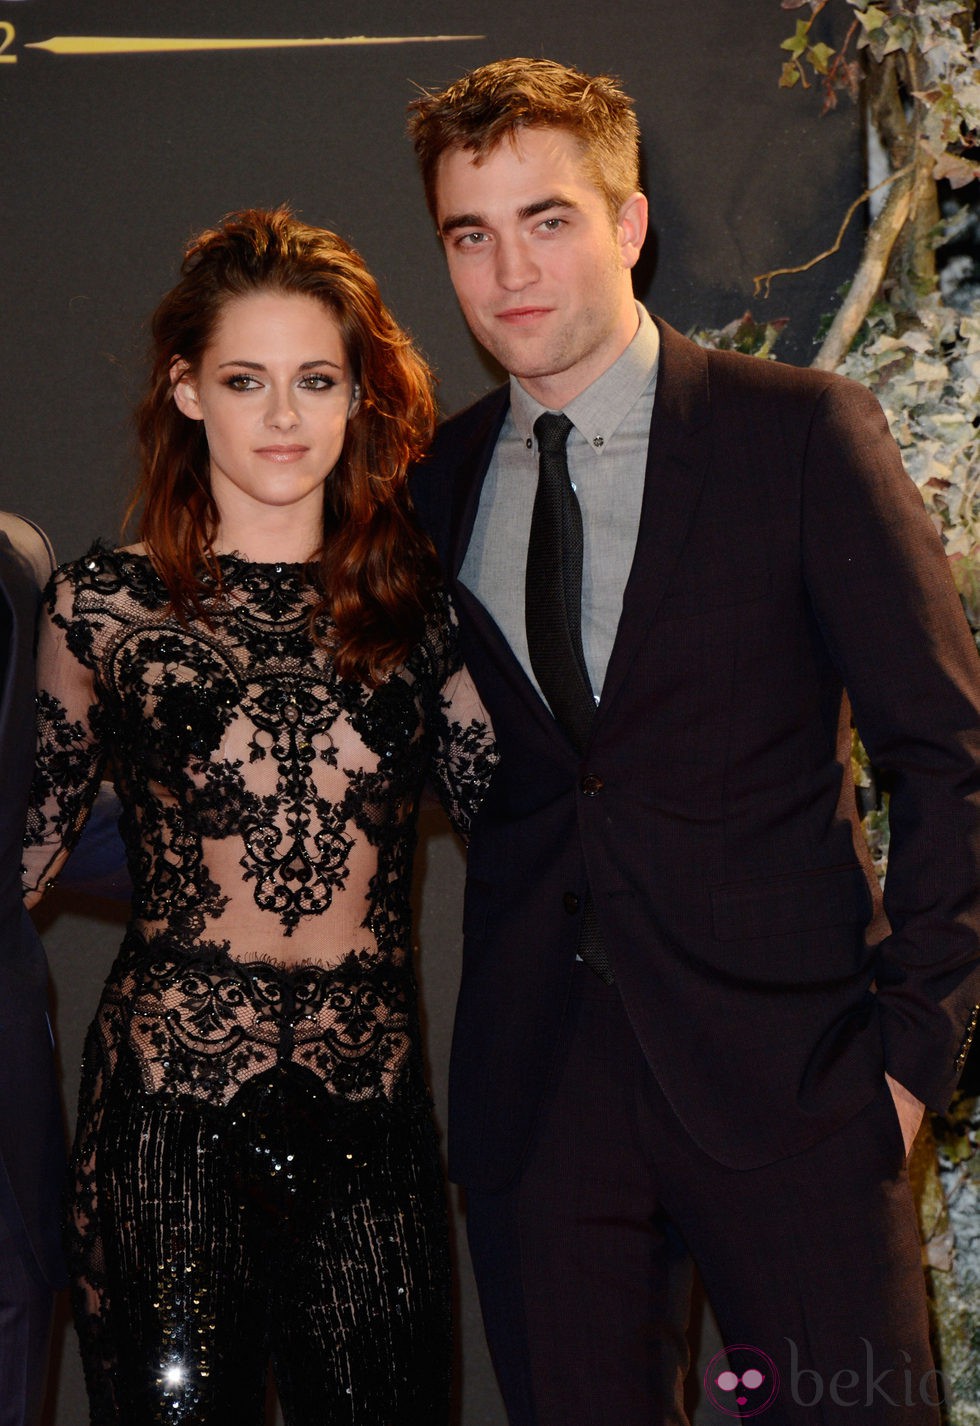 Kristen Stewart y Robert Pattinson estrenan 'Amanecer. Parte 2' en Londres